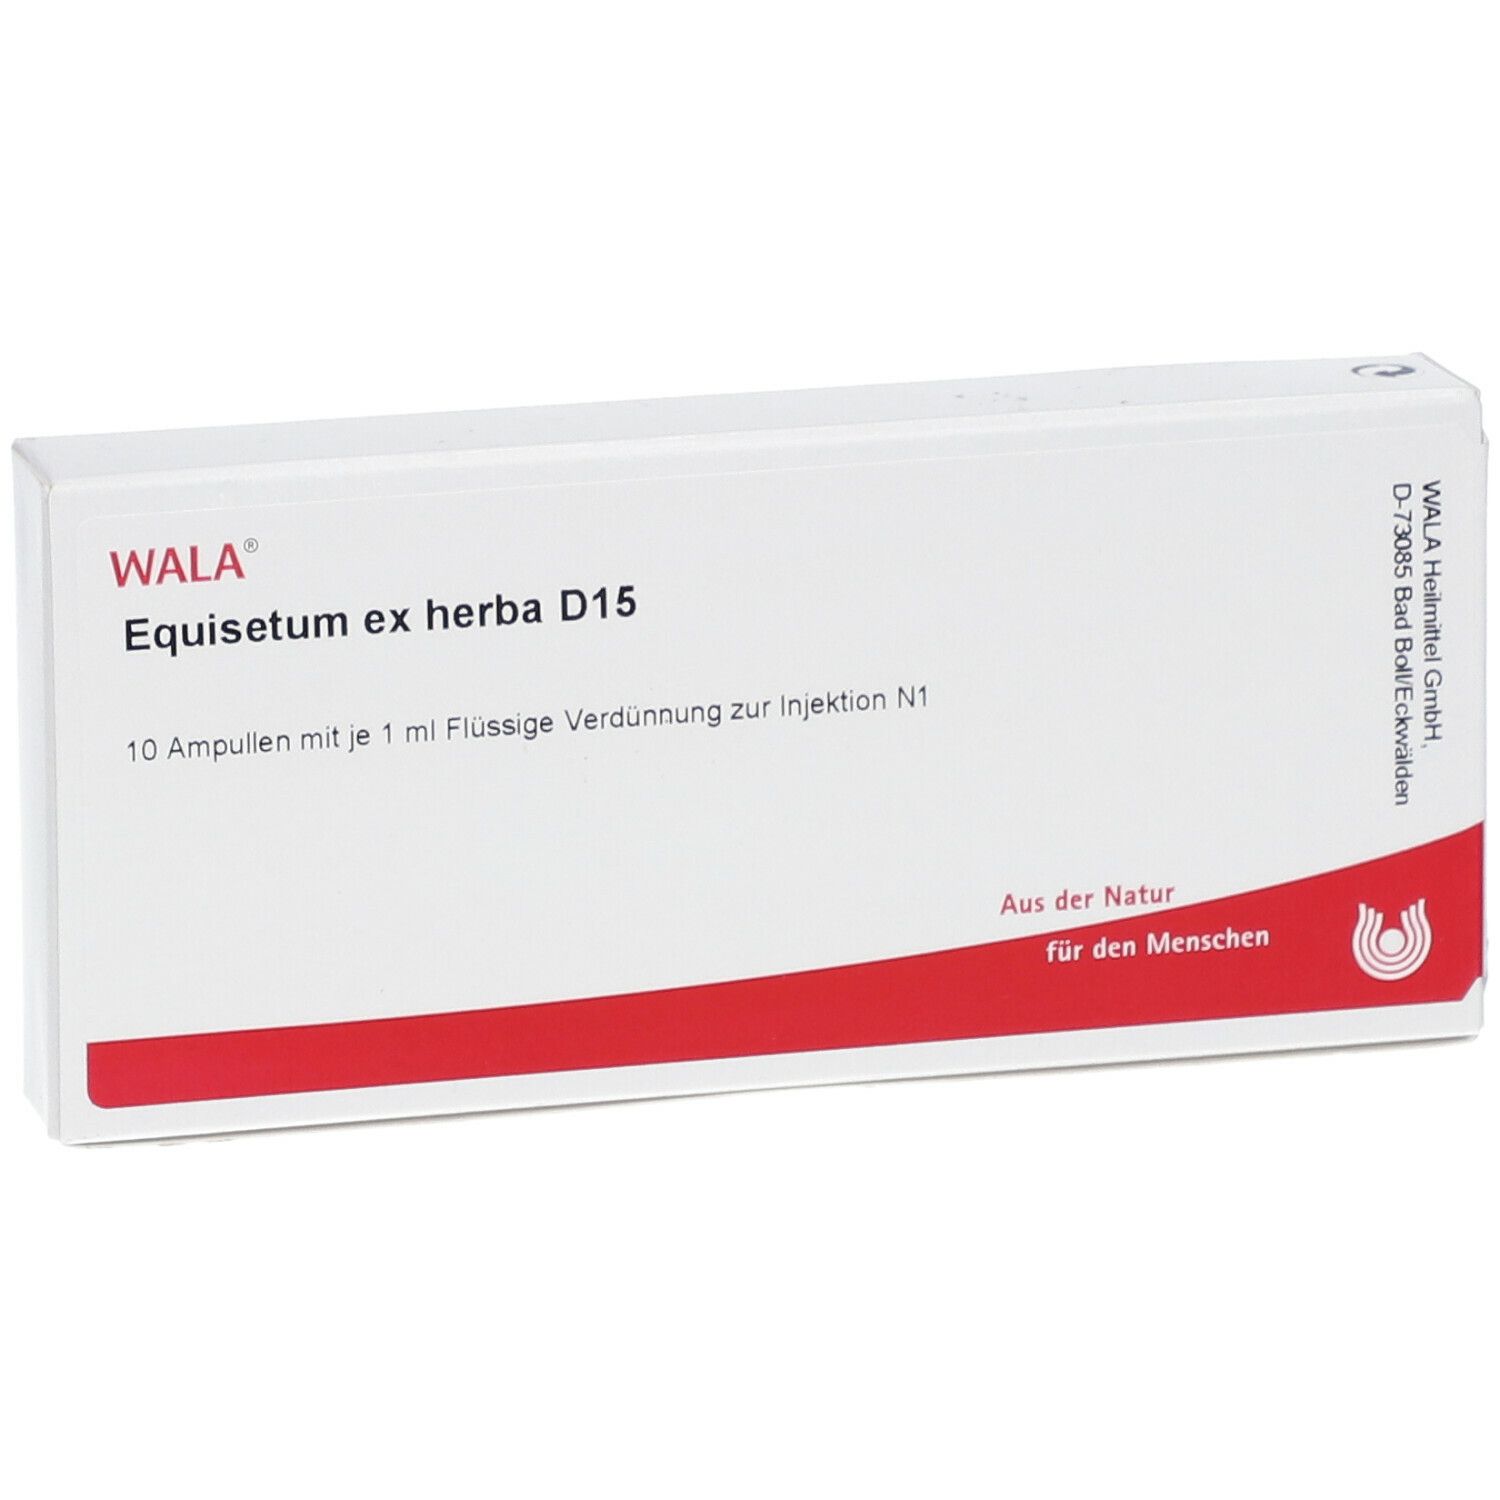 WALA® Equisetum ex herba D 15